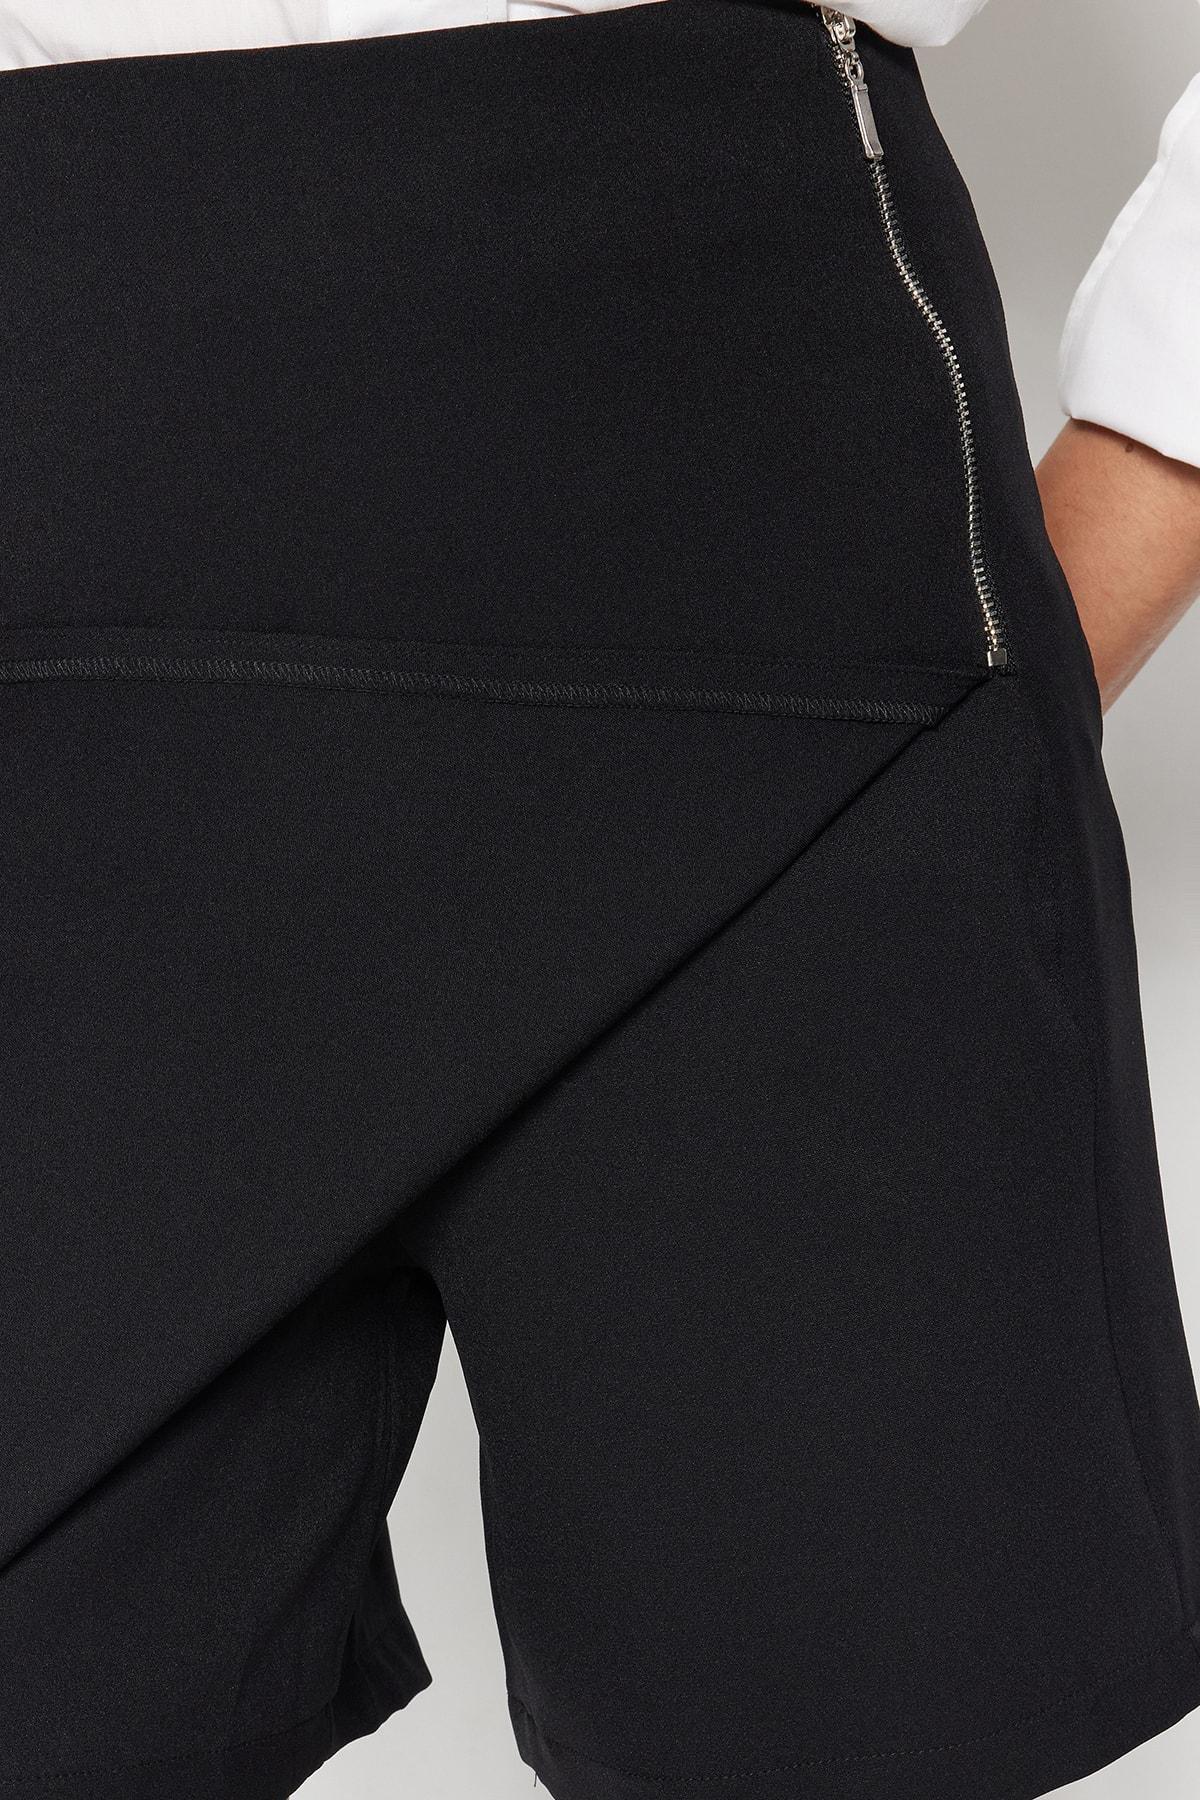 Trendyol - Black High Waist Mini Shorts